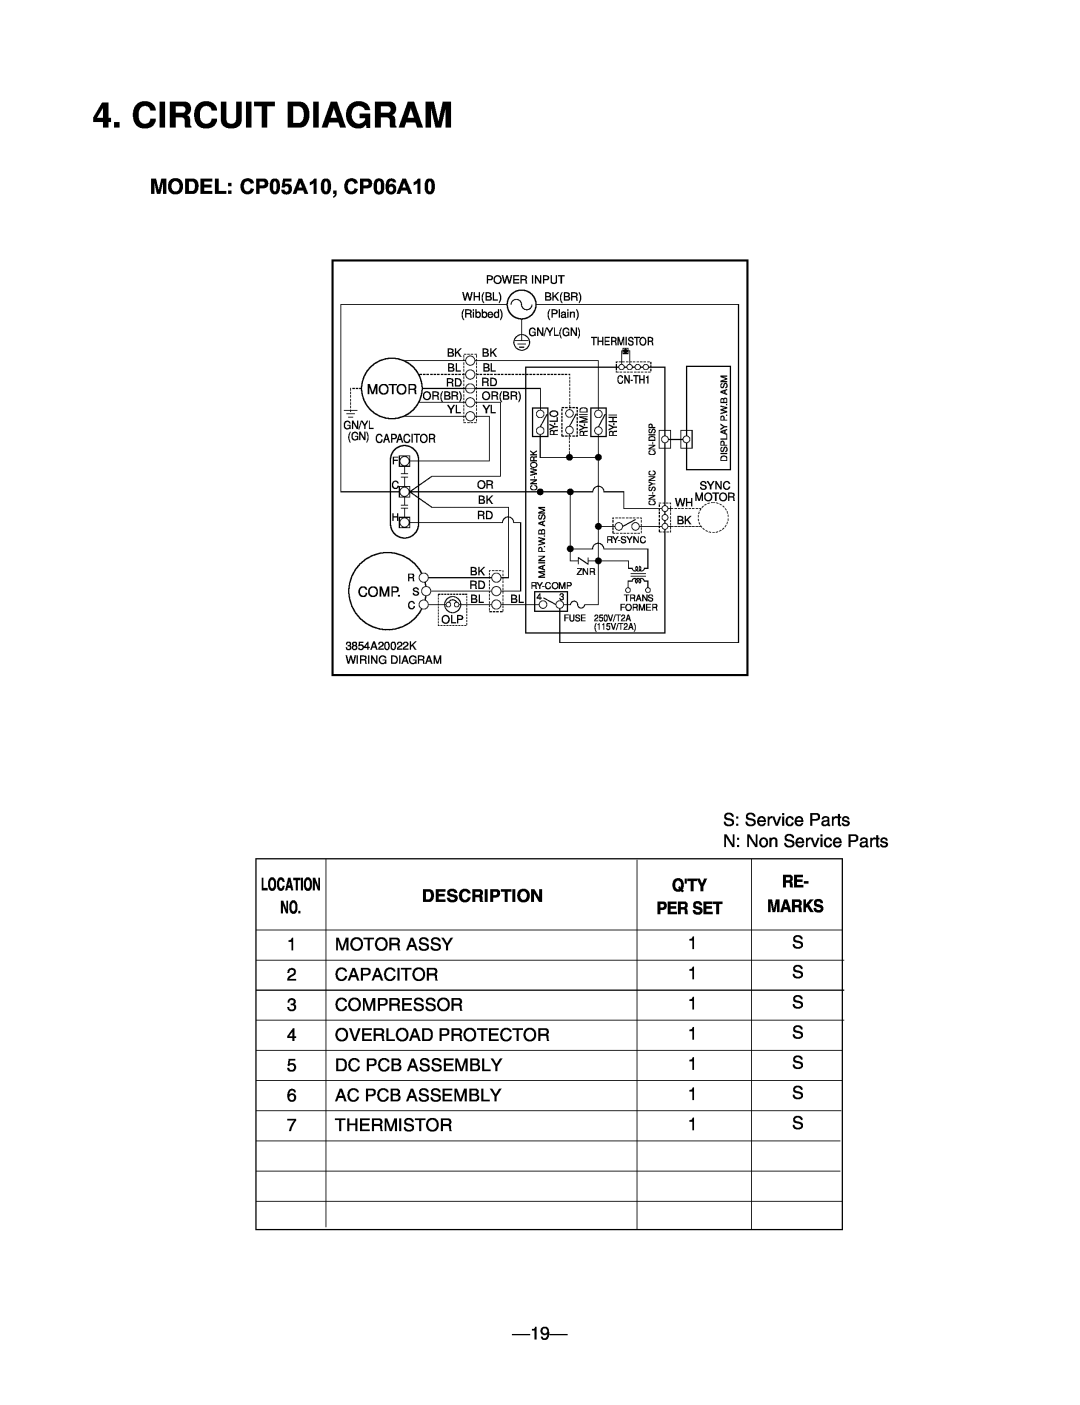 Friedrich manual Circuit Diagram, Description, MODEL CP05A10, CP06A10 